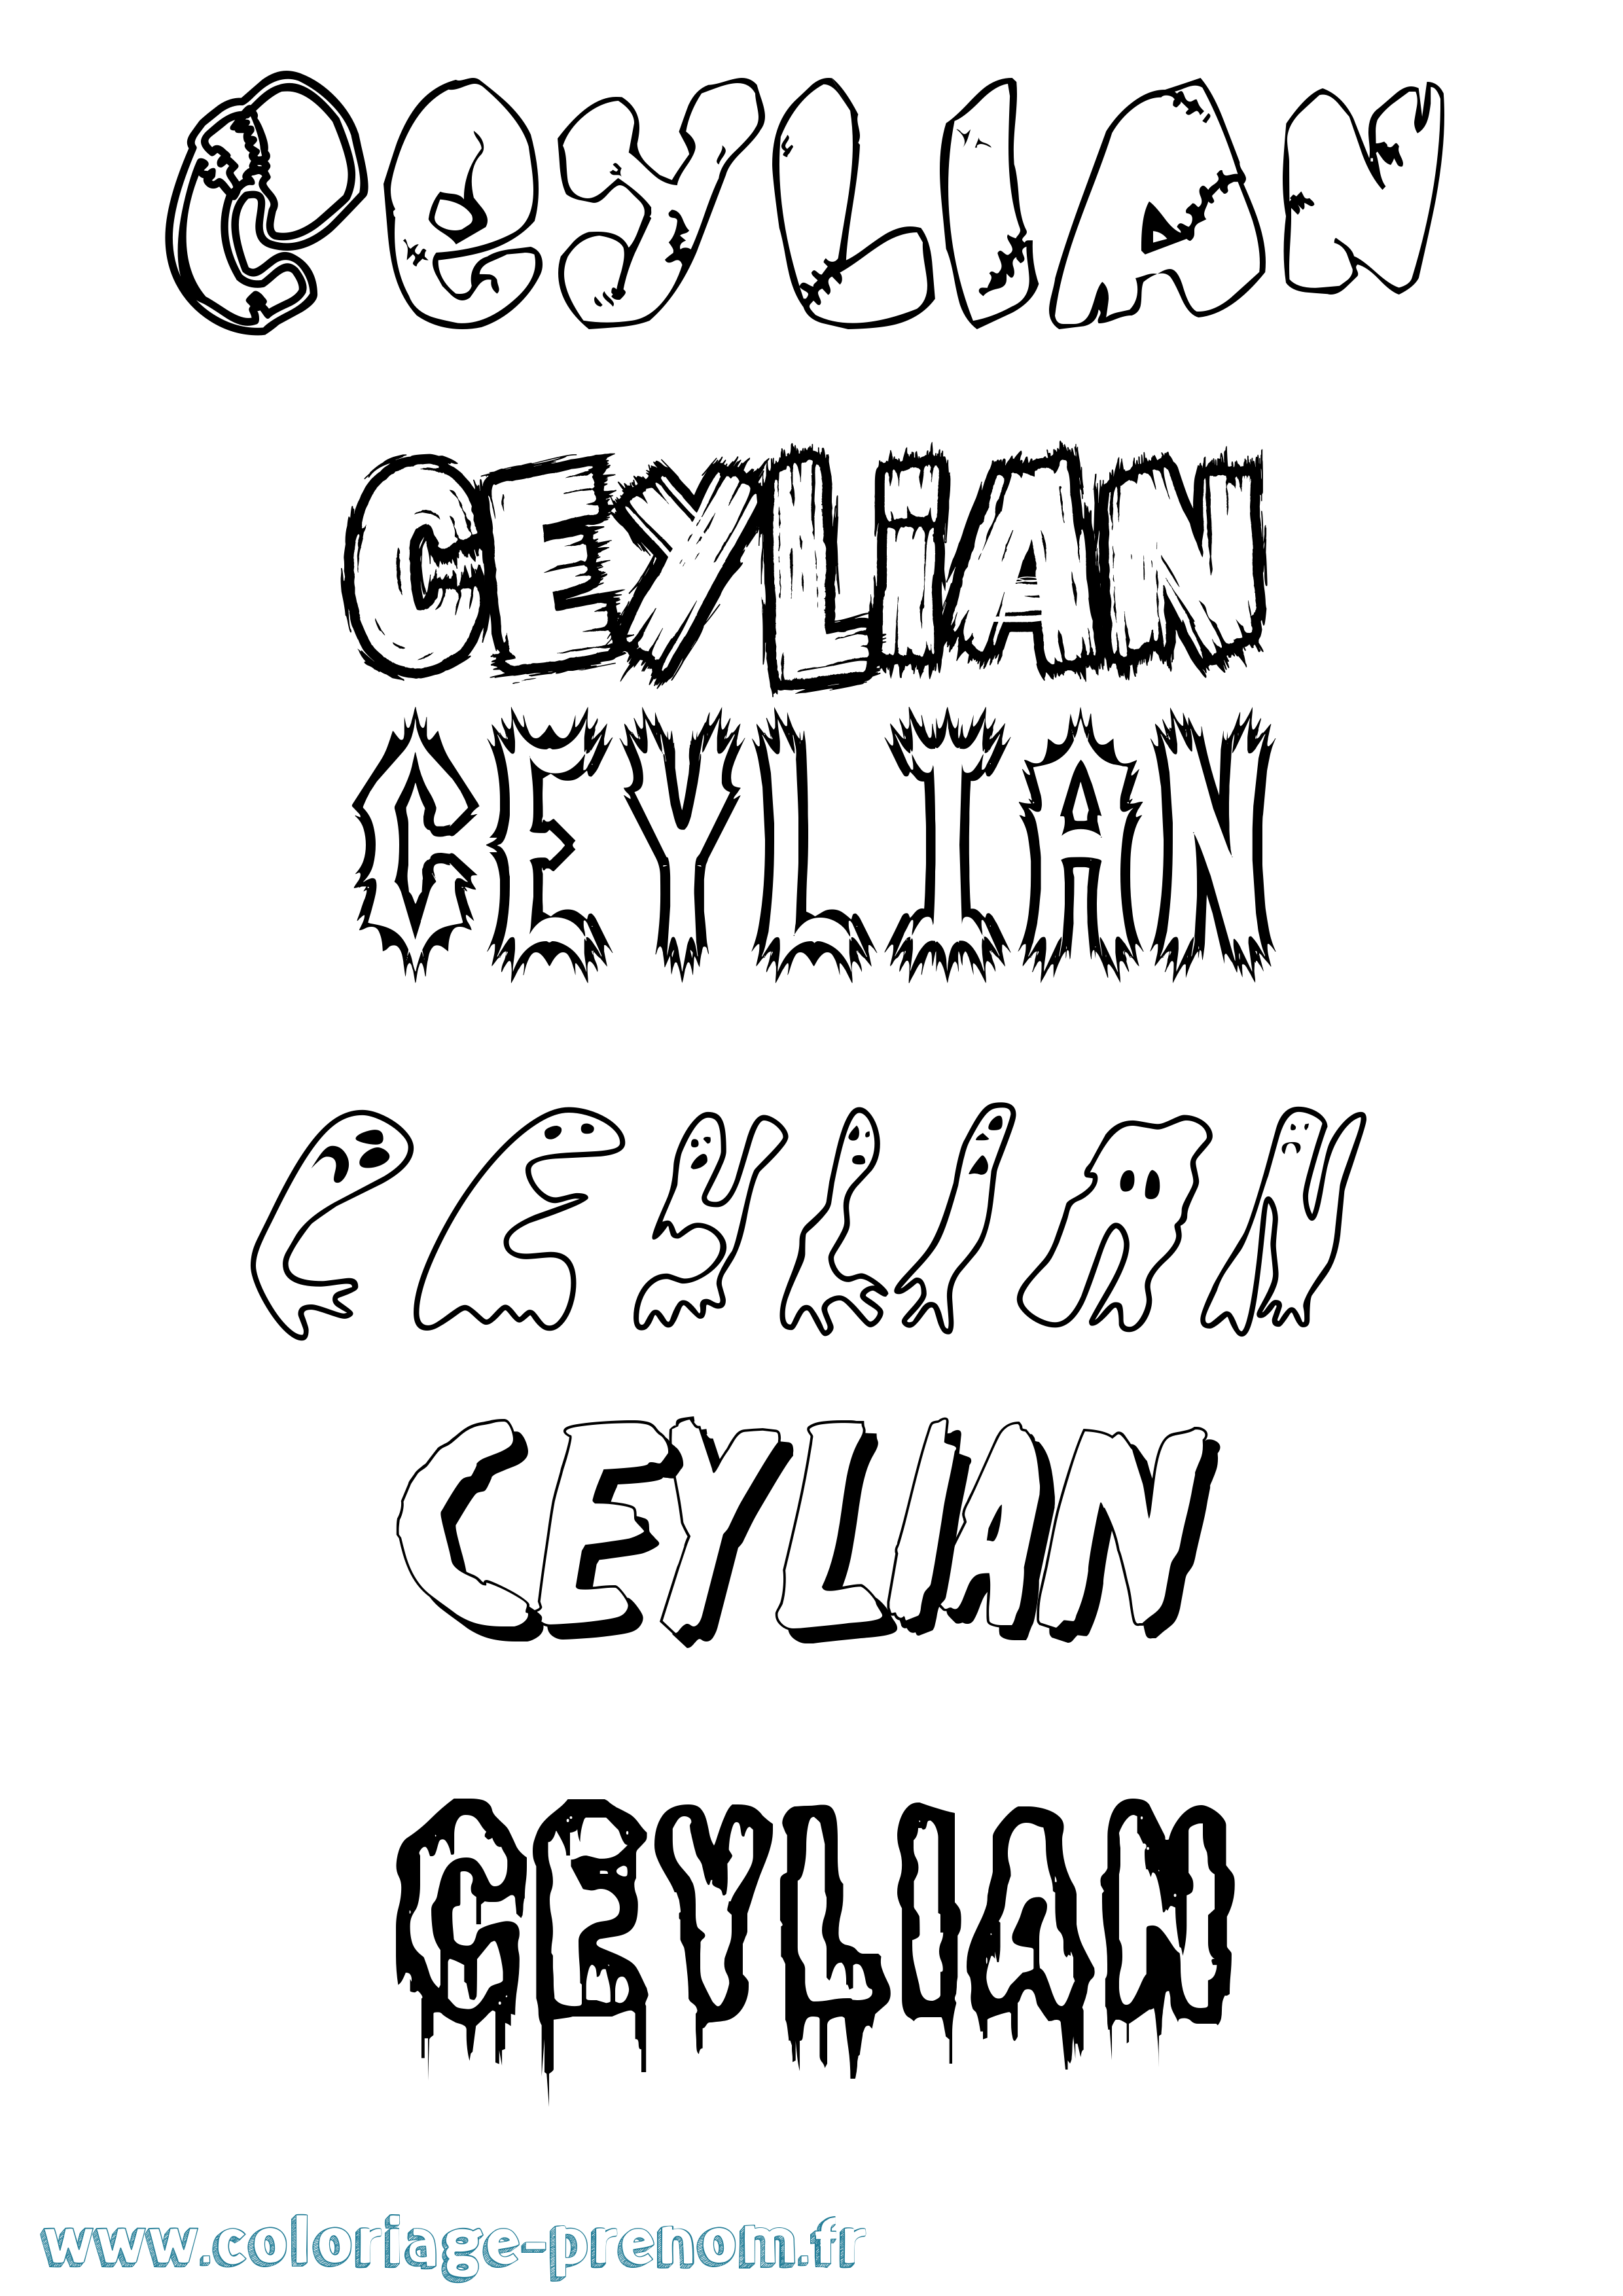 Coloriage prénom Ceylian Frisson